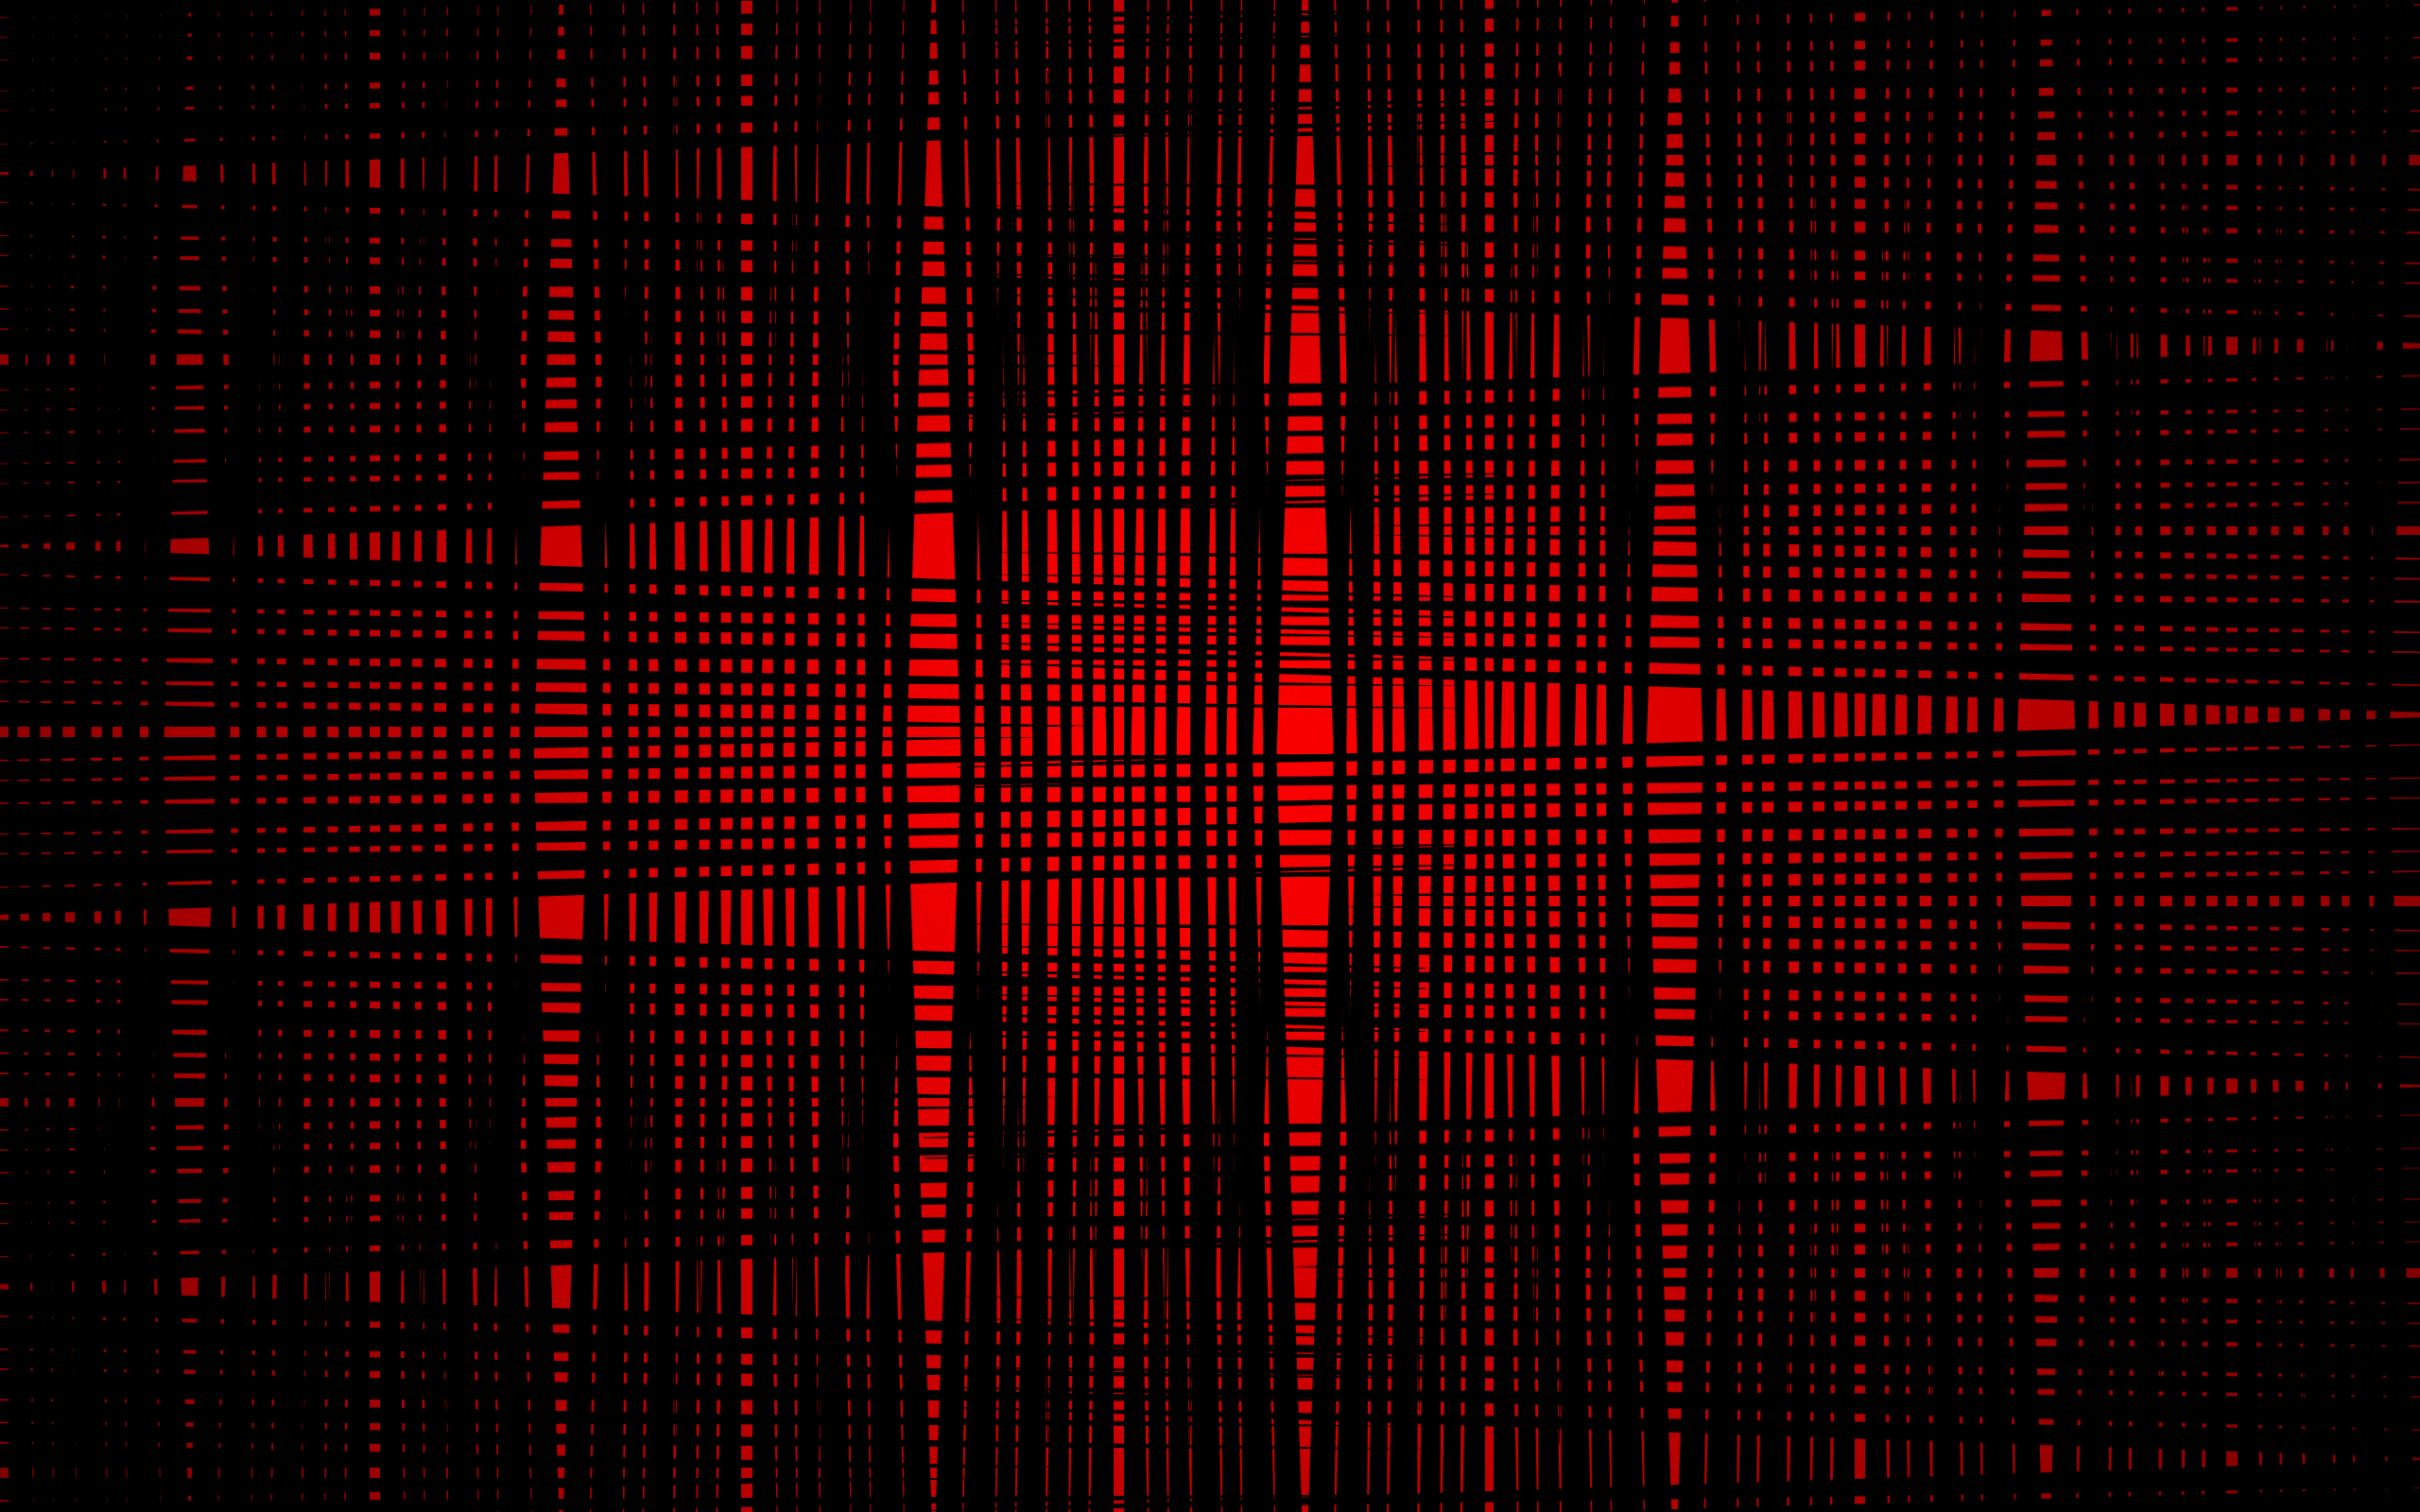 Black and Red Desktop Wallpaper